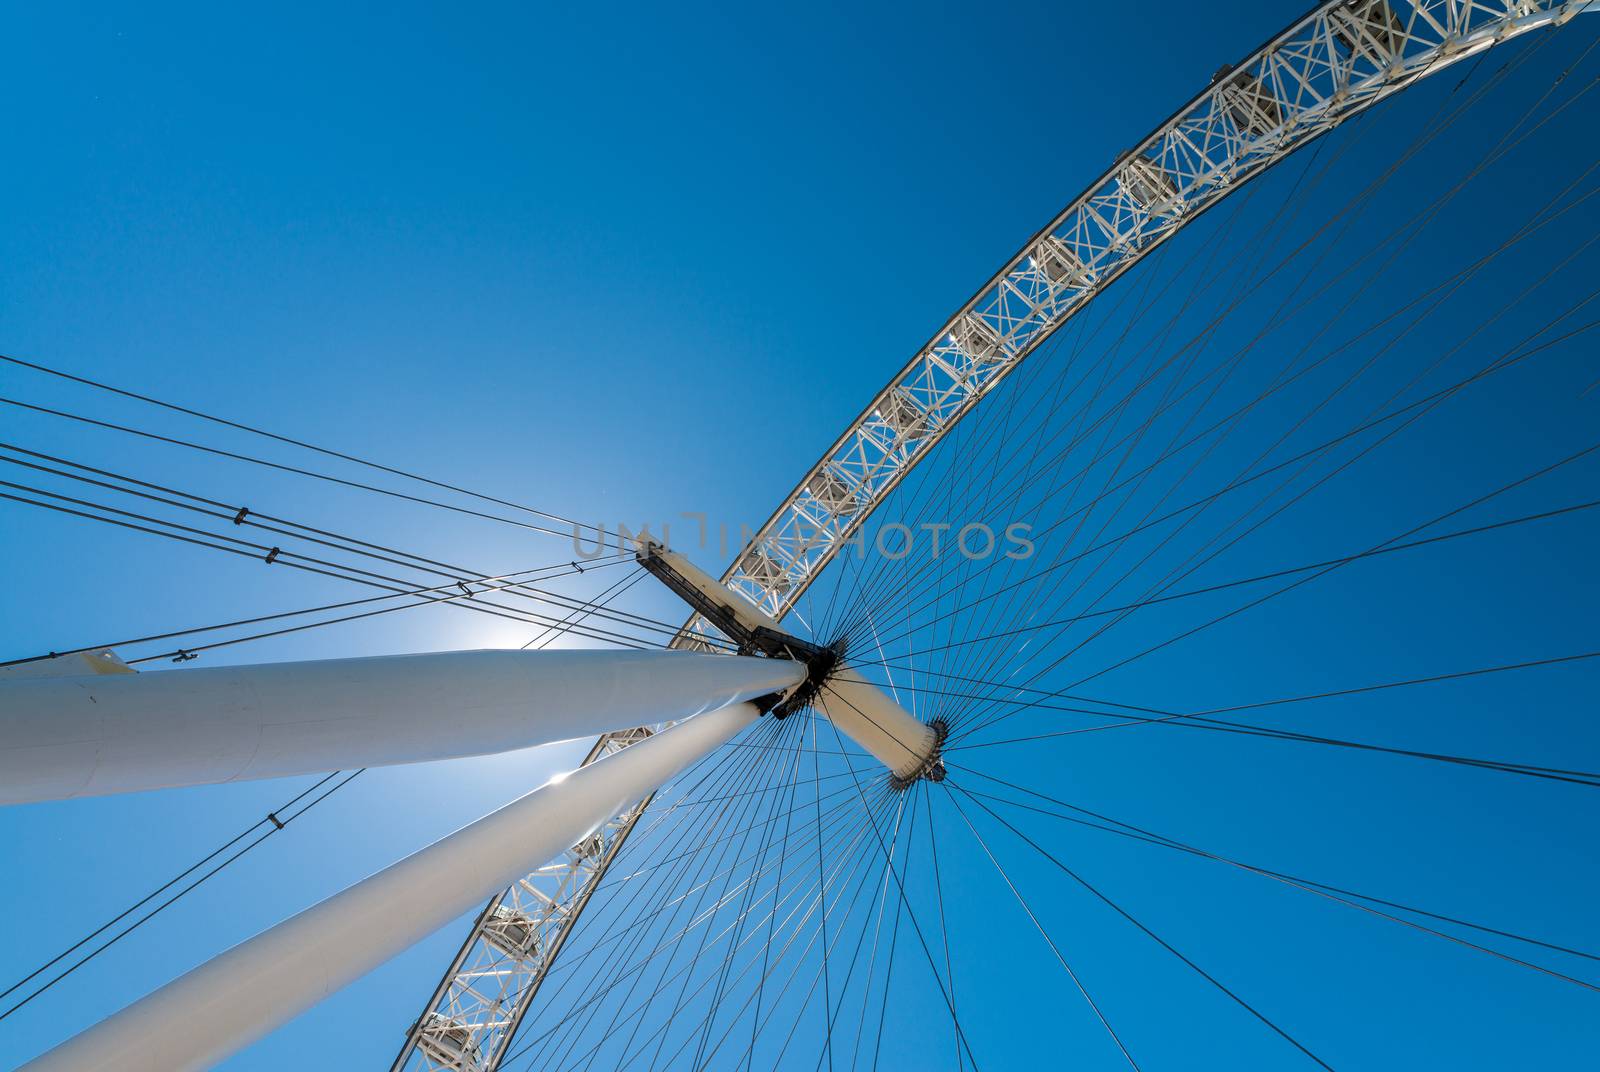 The London Eye wheel on the River Thames South Bank, London, United Kingdom.